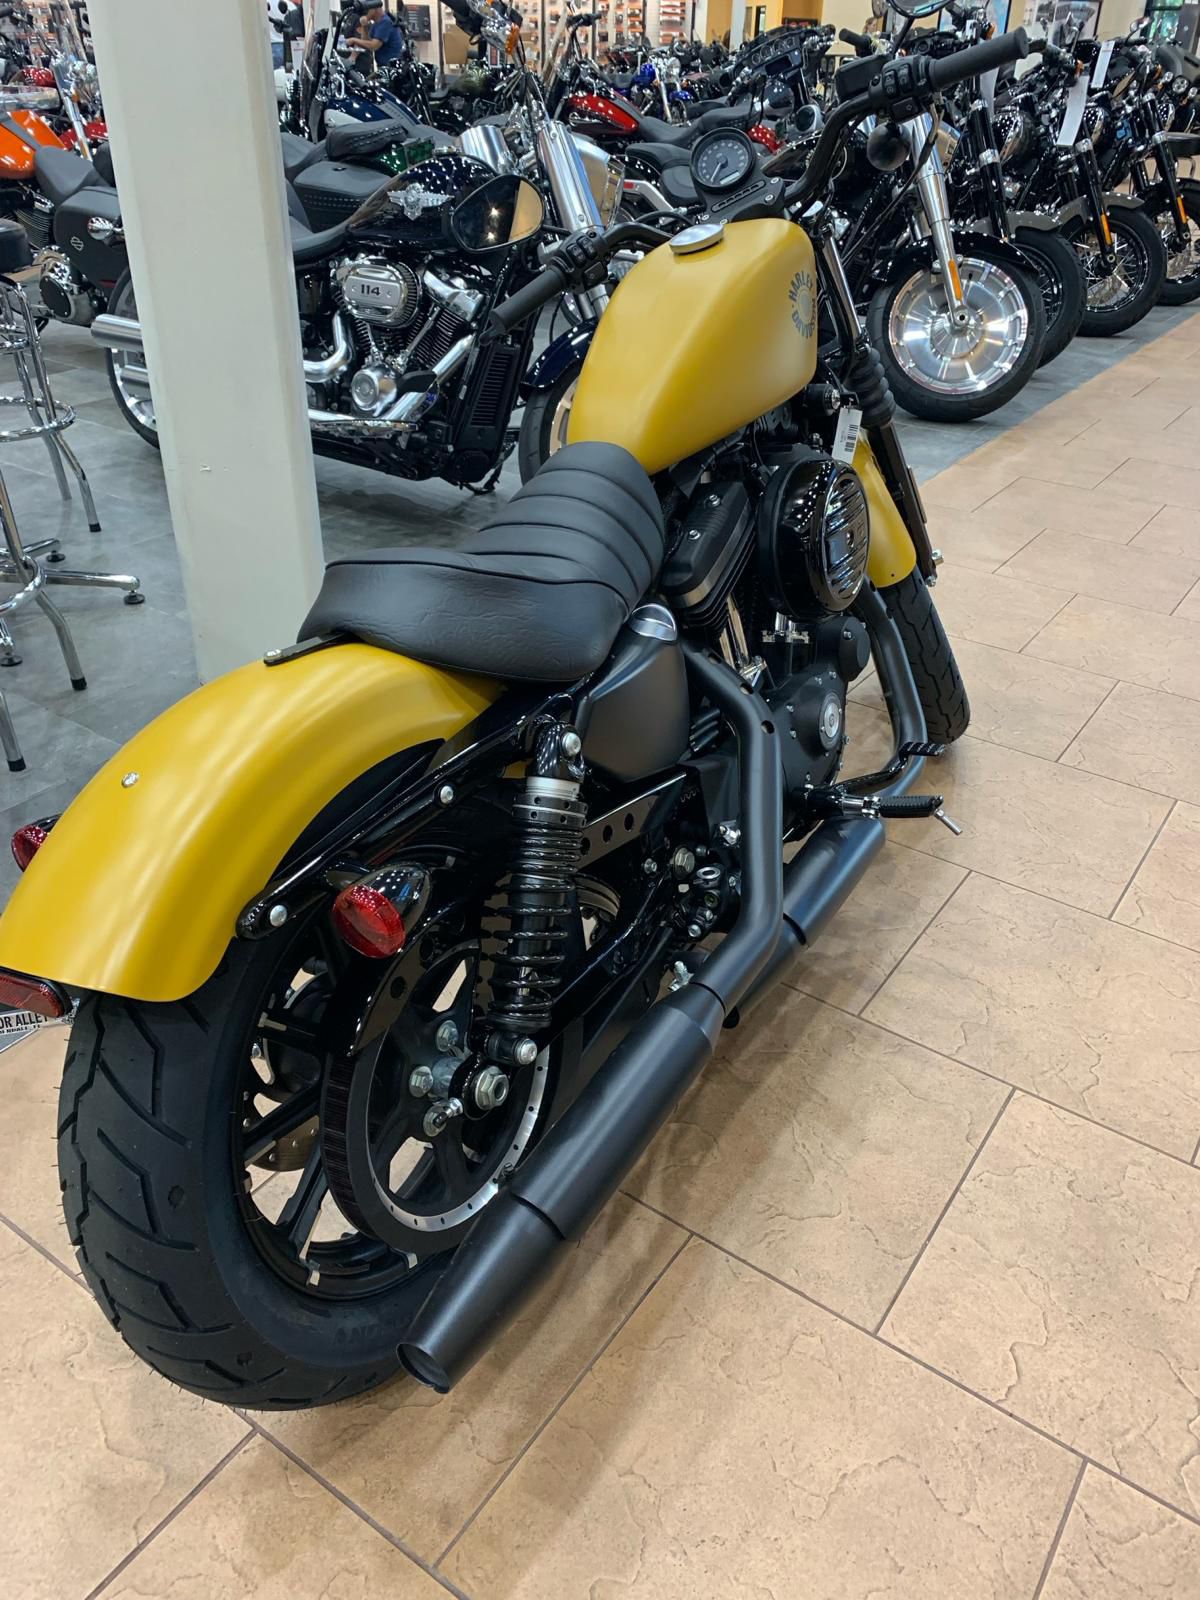 2019 Harley davidson 883 iron